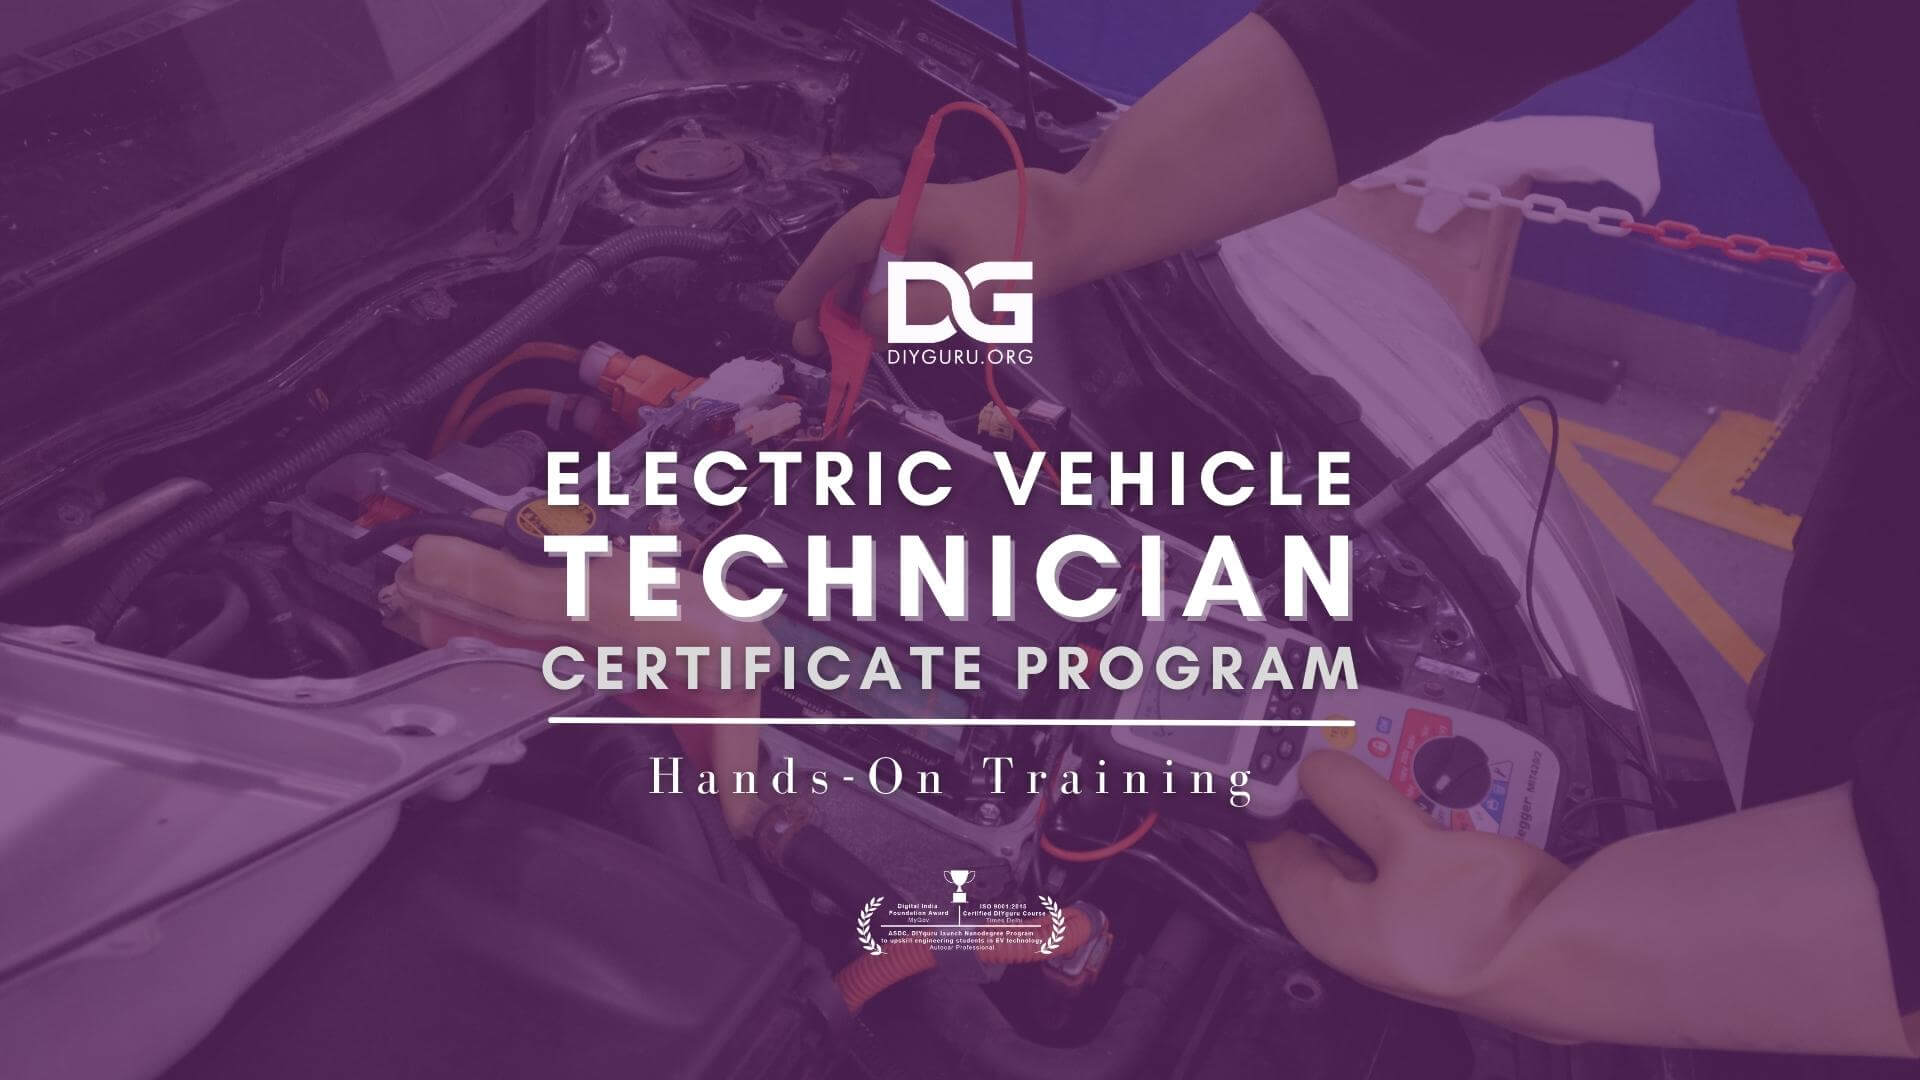 https://e-vehicleinfo.com/certified-electric-vehicle-technician-program/